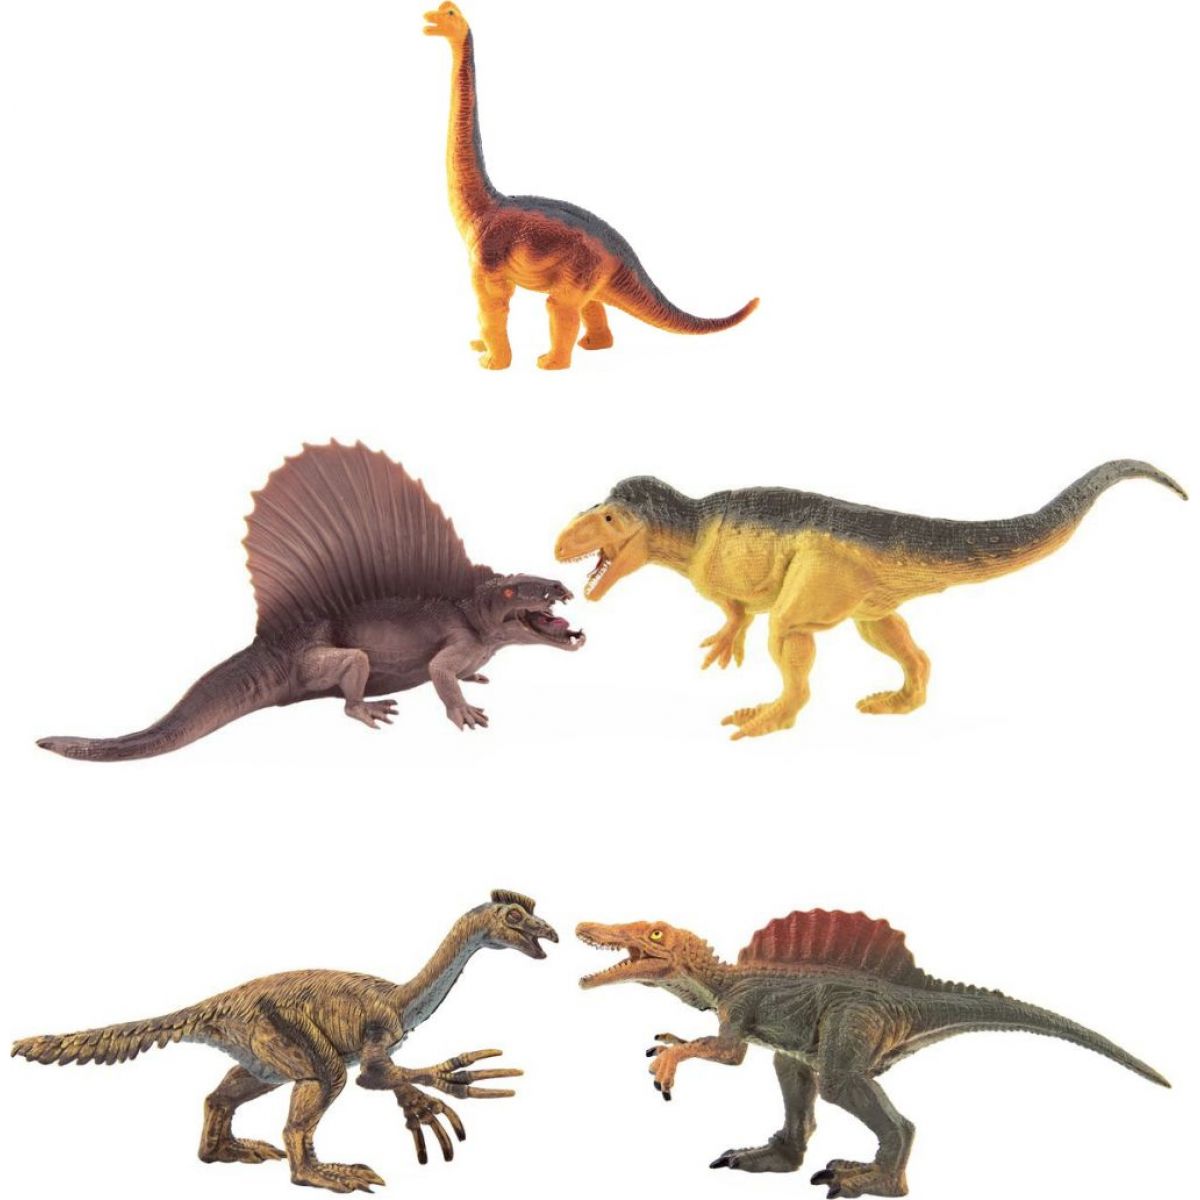 Dinosaurus plastový 16-18cm 5ks